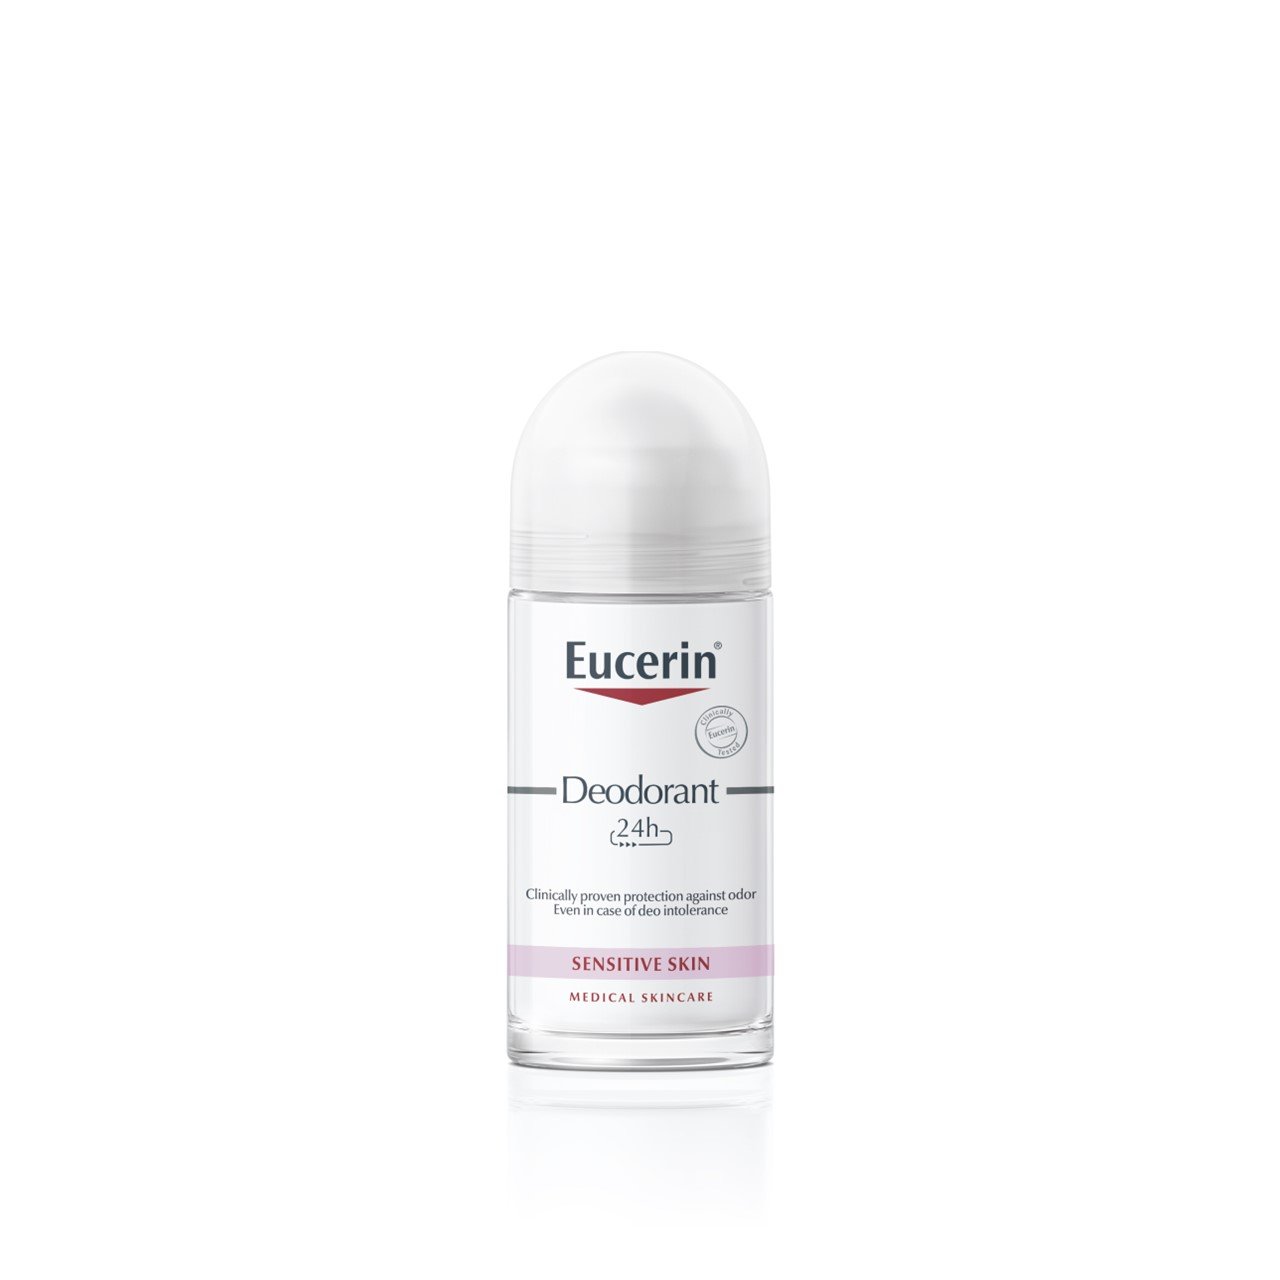 Eucerin Desodorante 24h Roll-on 50ml